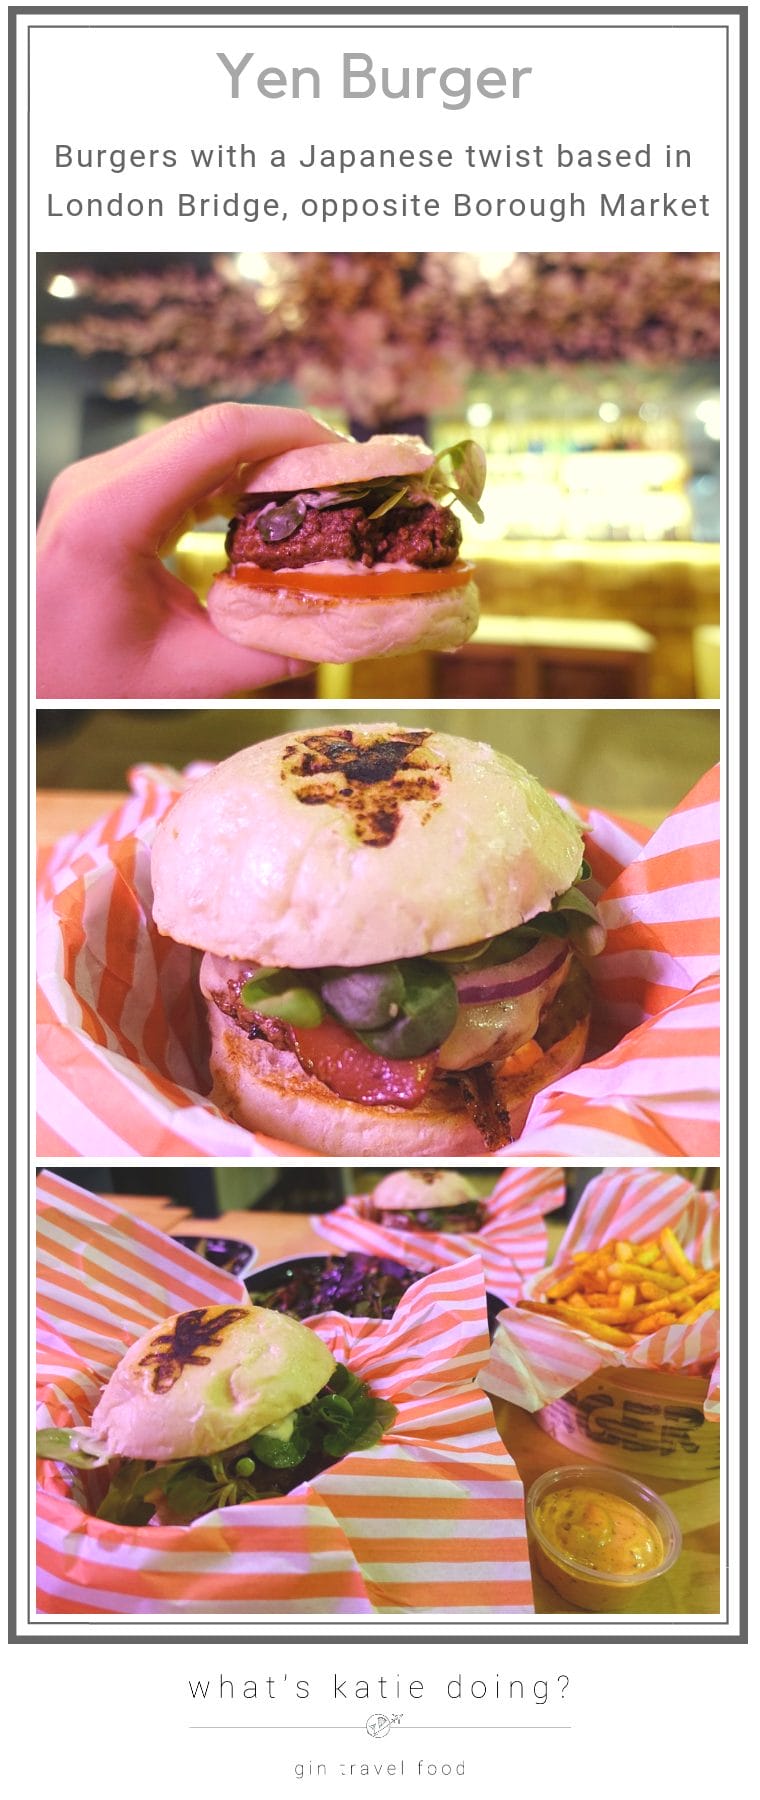 Yen Burger London Bridge, burgers with a Japanese twist on What's Katie Doing? blog